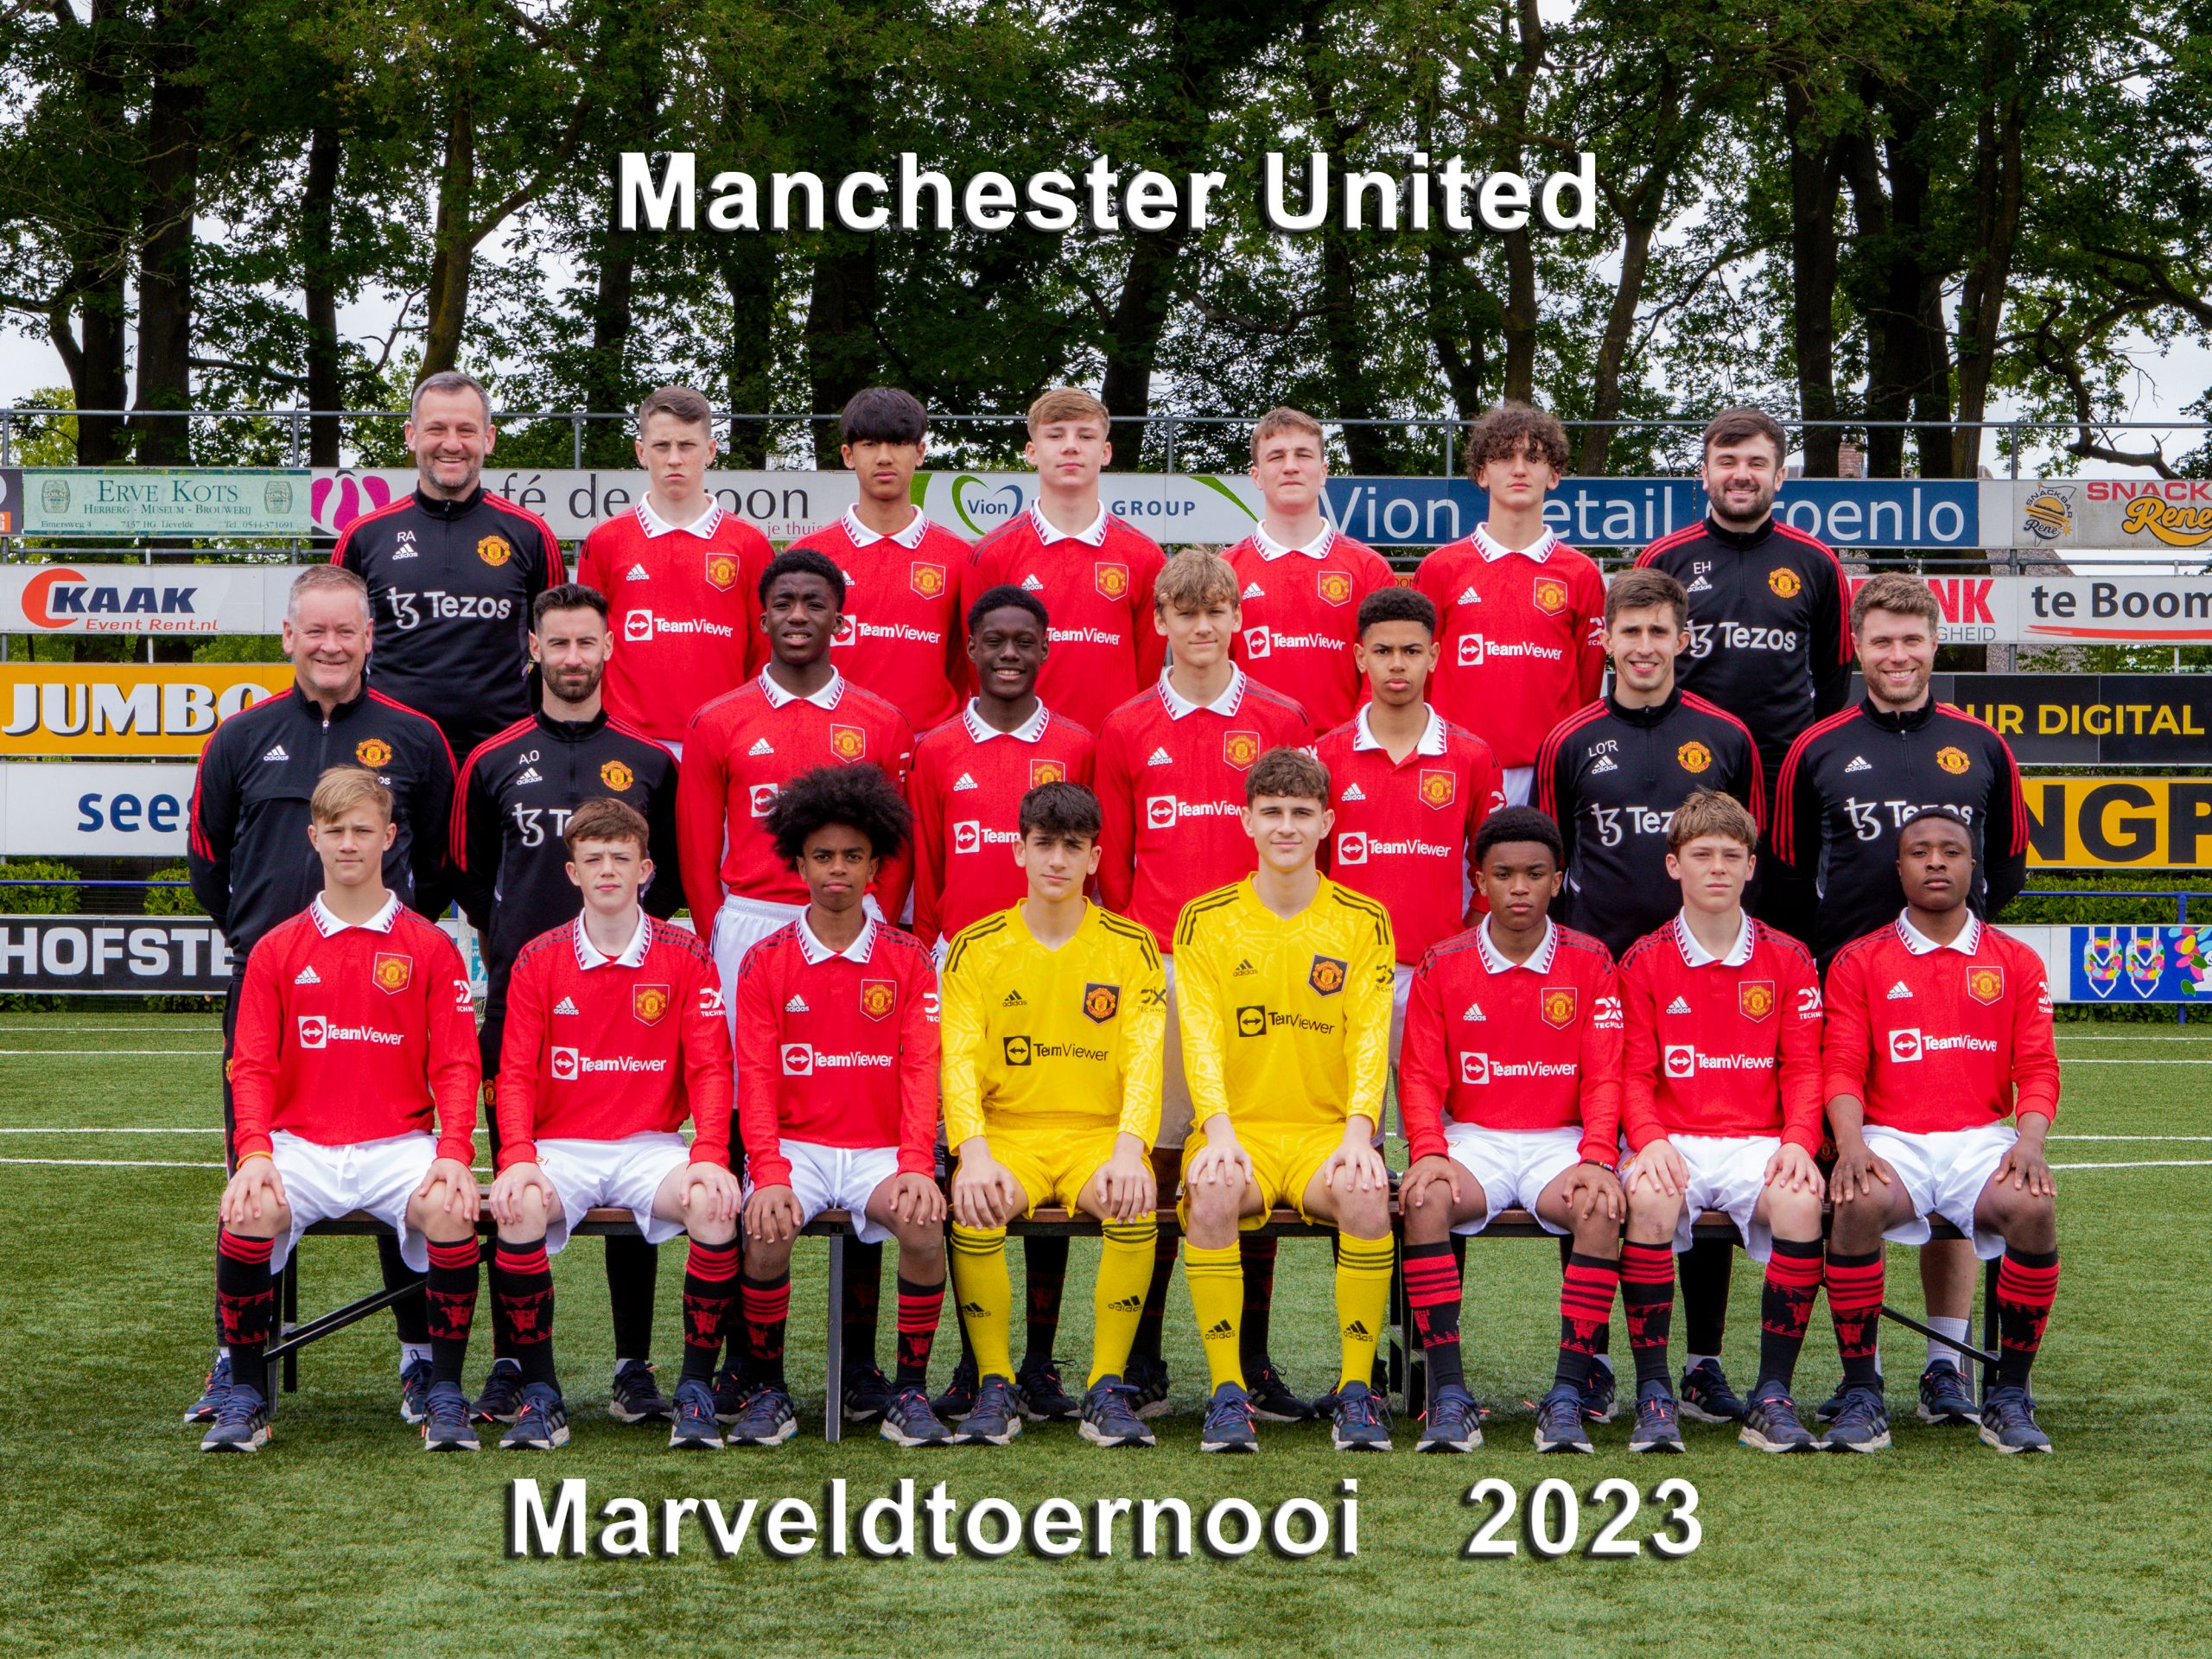 Marveld Tournament 2023 - Team Manchester United